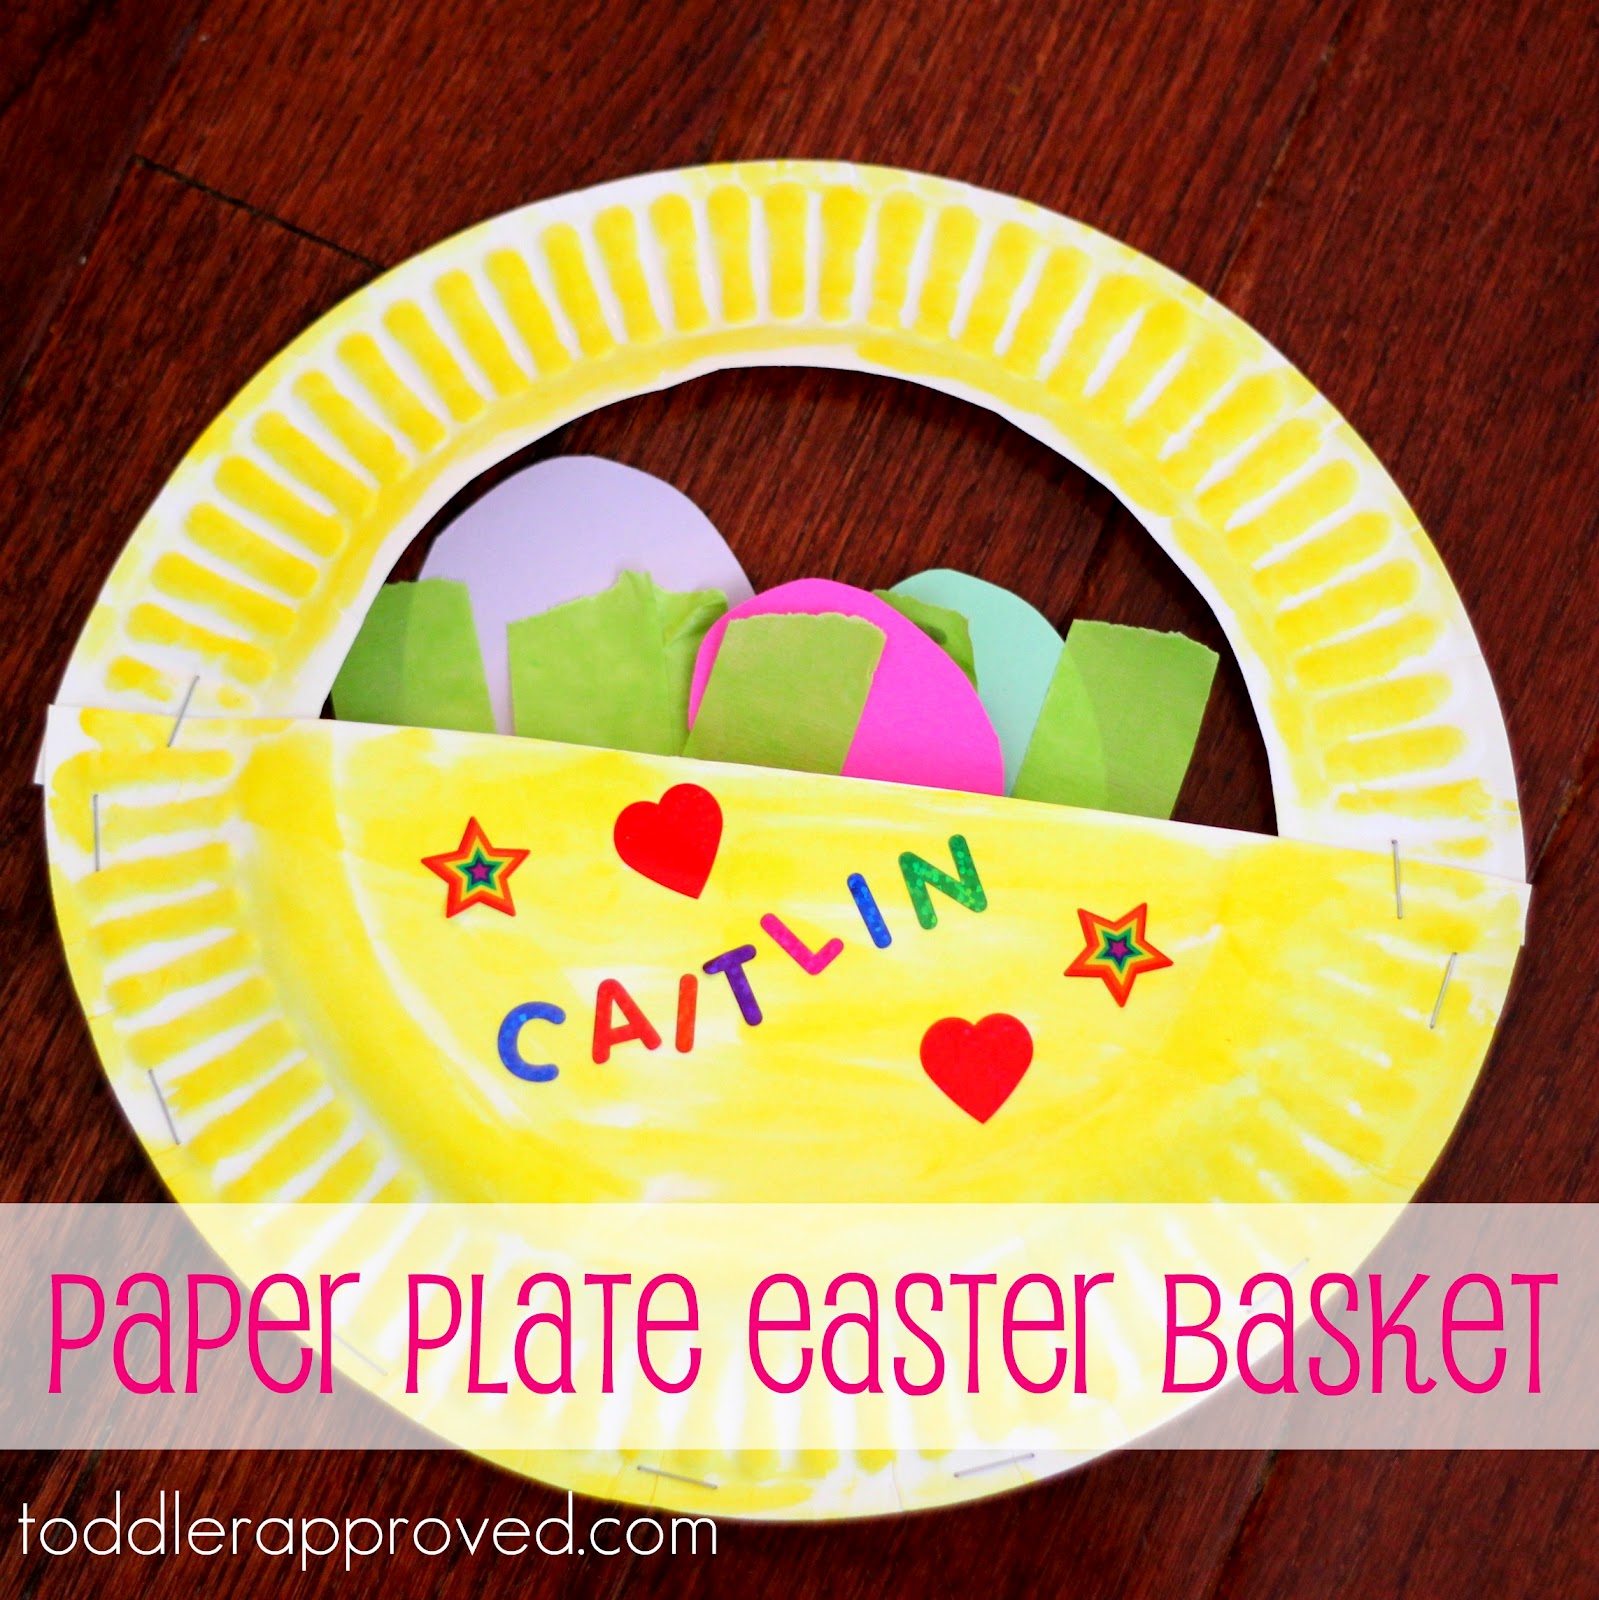 Toddler Approved! Paper Plate Easter Basket